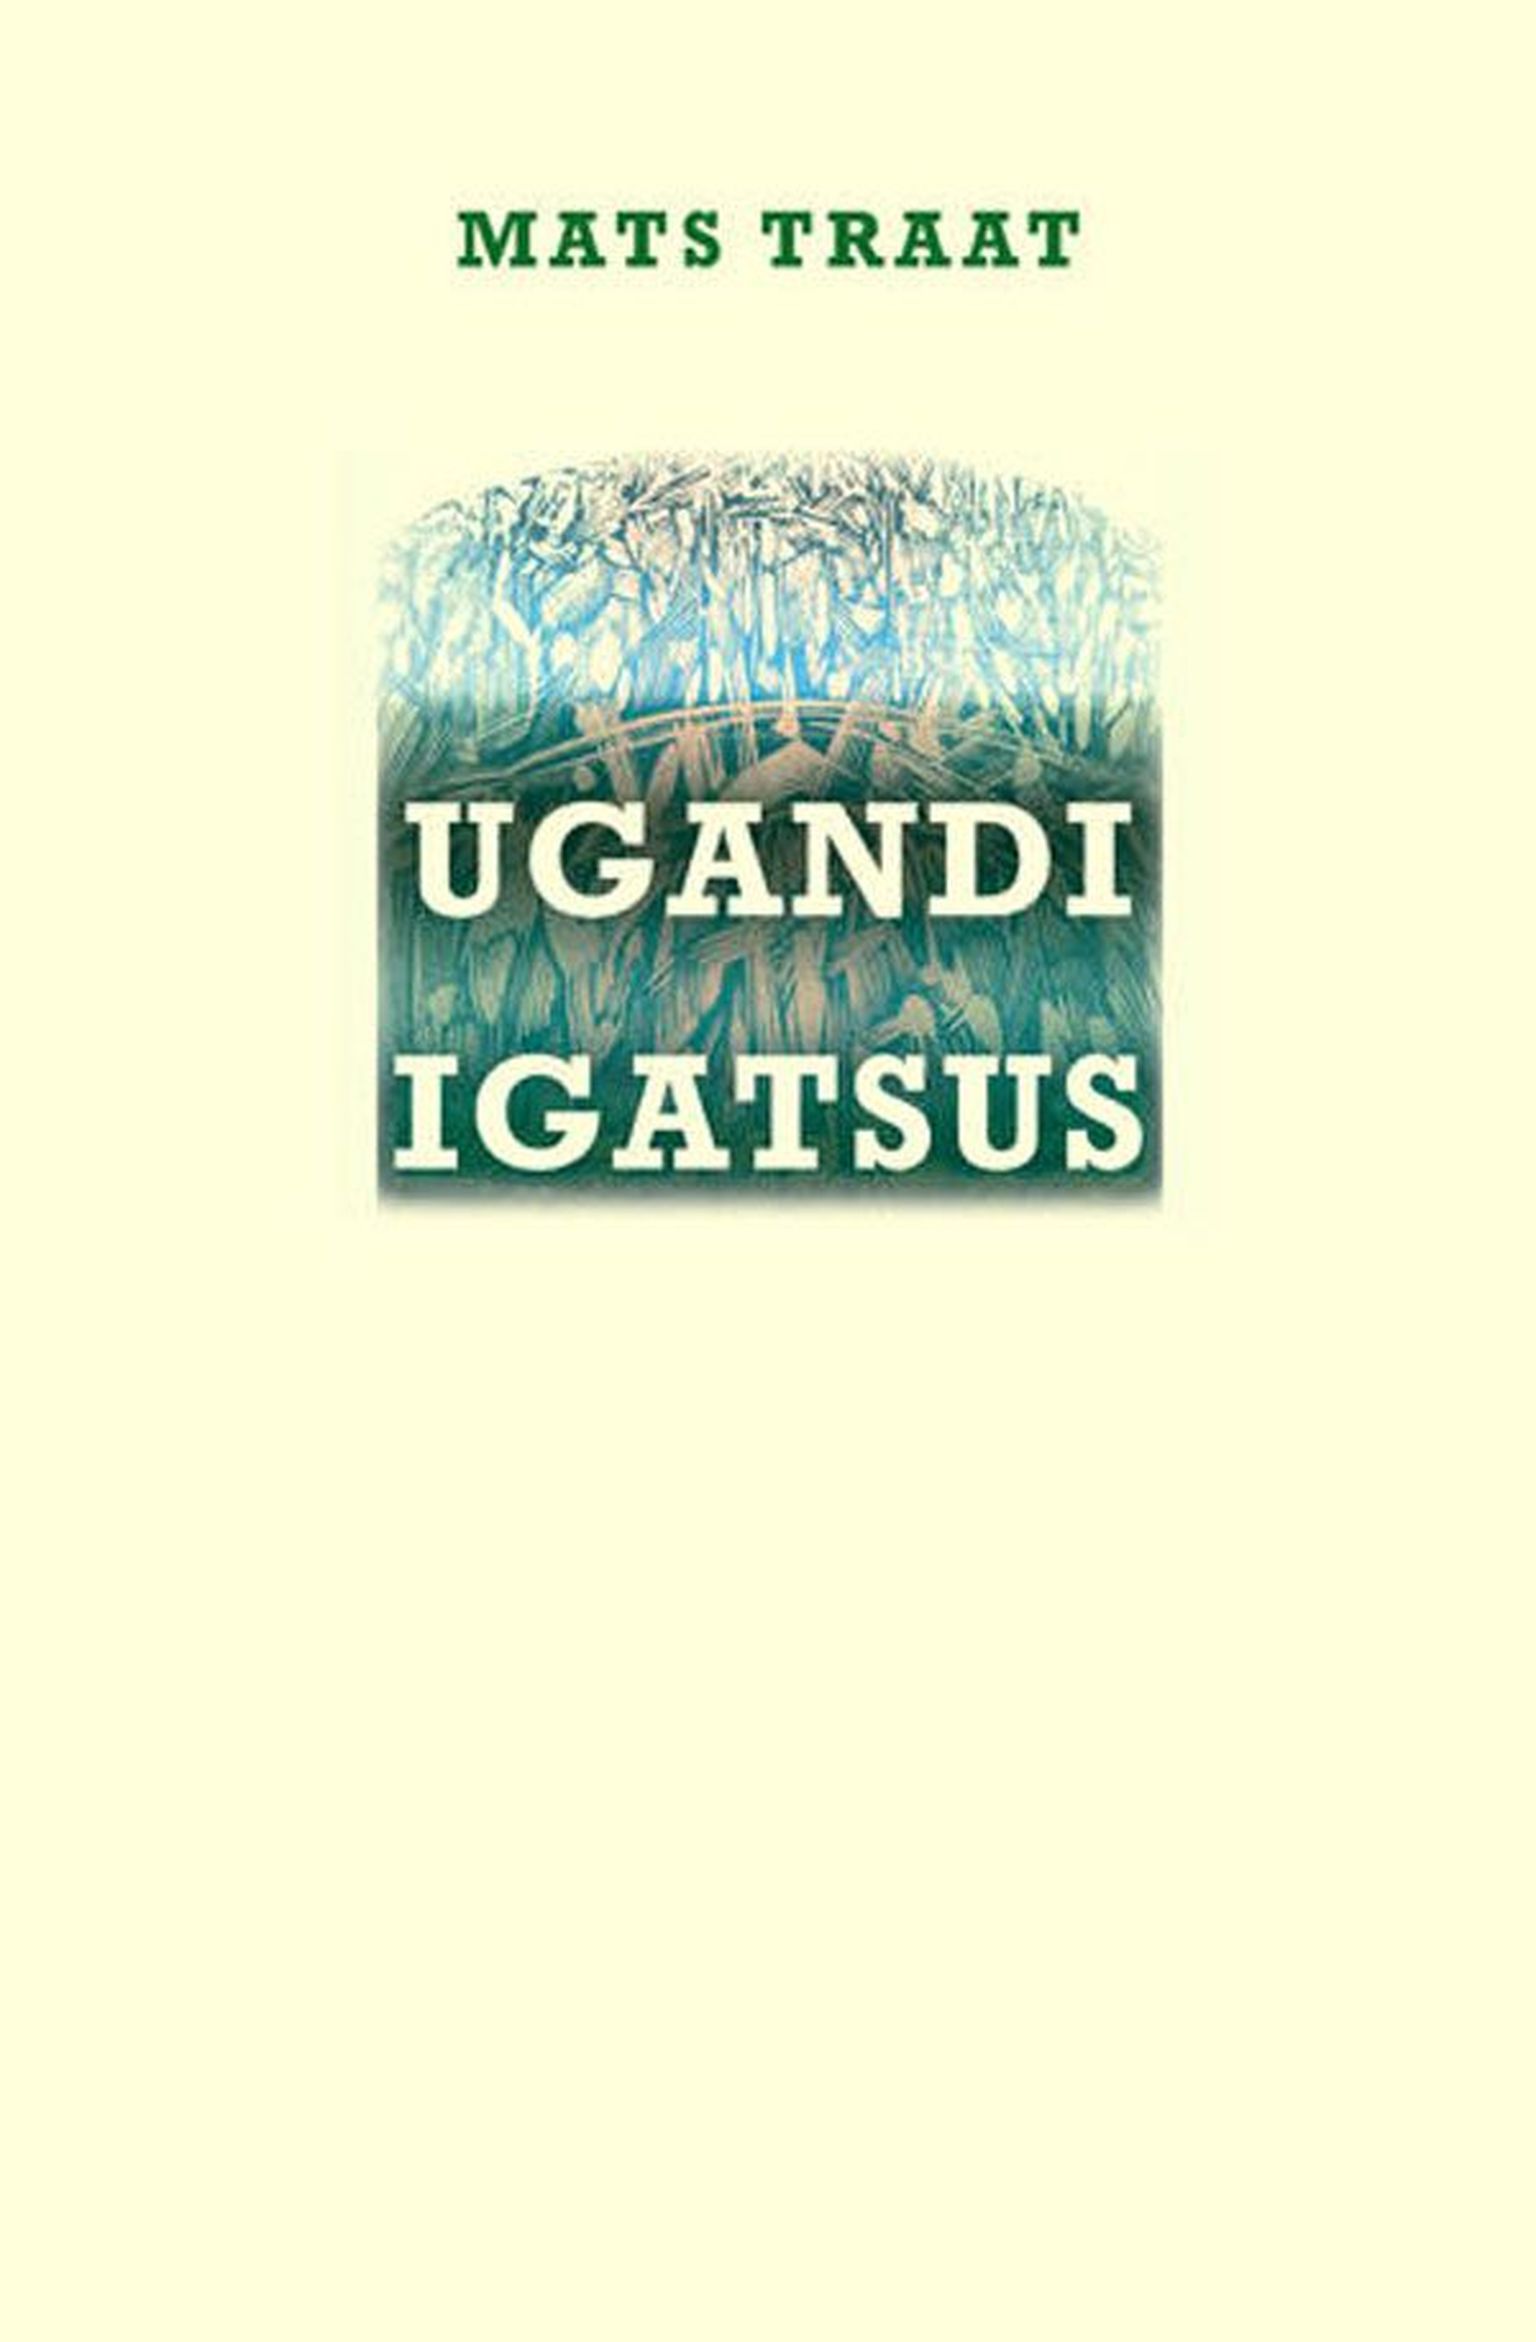 Mats Traat 
«Ugandi igatsus. Kolmas kogu luuletusi tartu murden»
Ilmamaa, 2013
72 lk